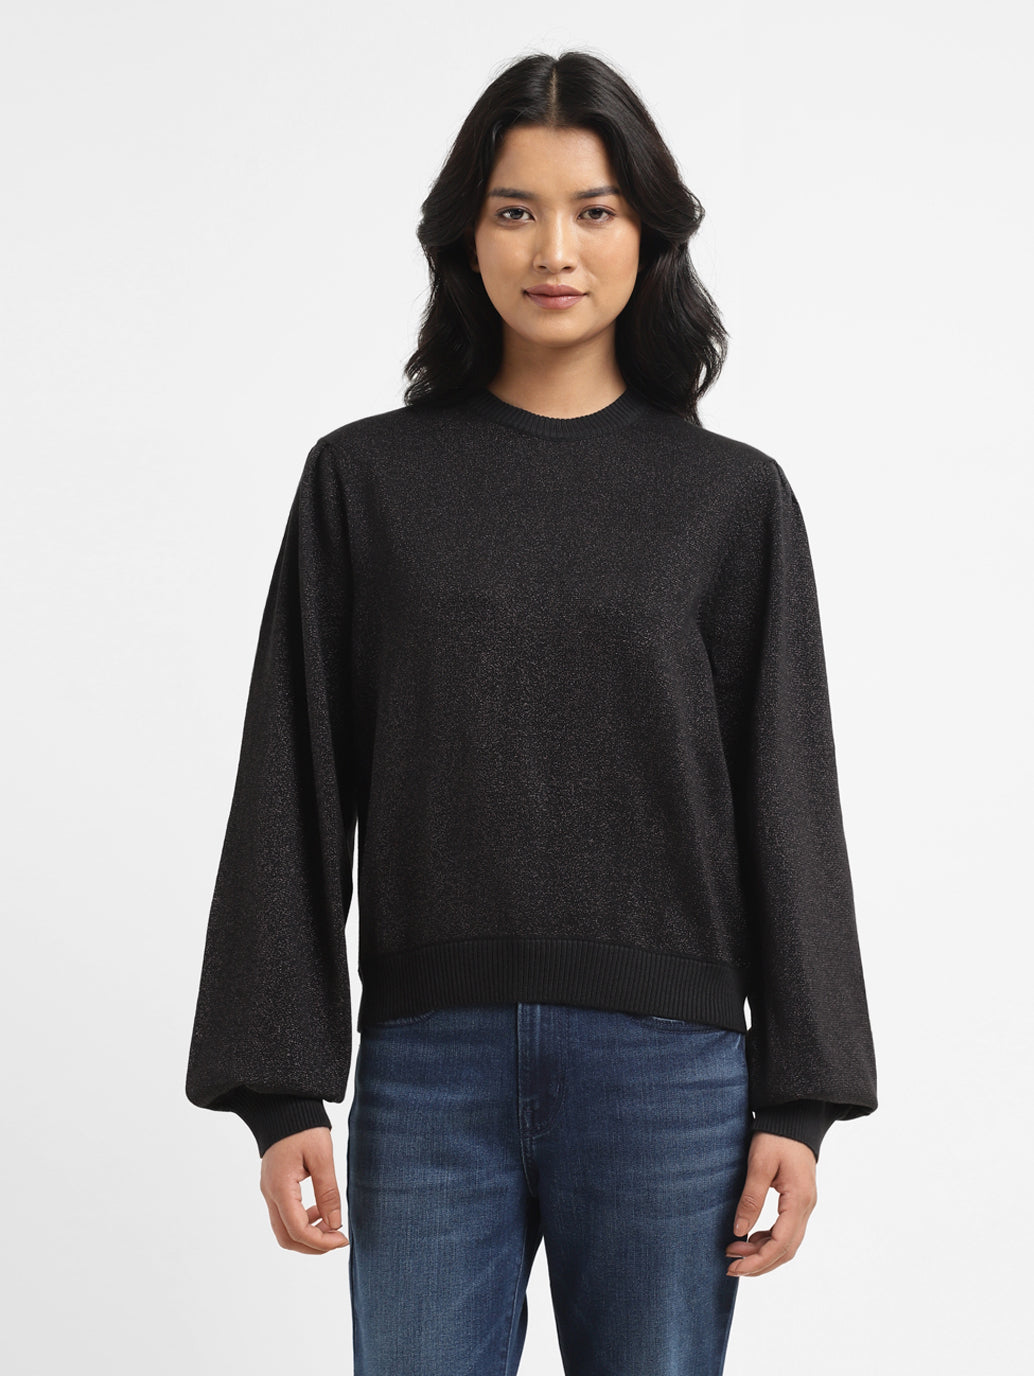 Women's Solid Black Crew Neck Sweater